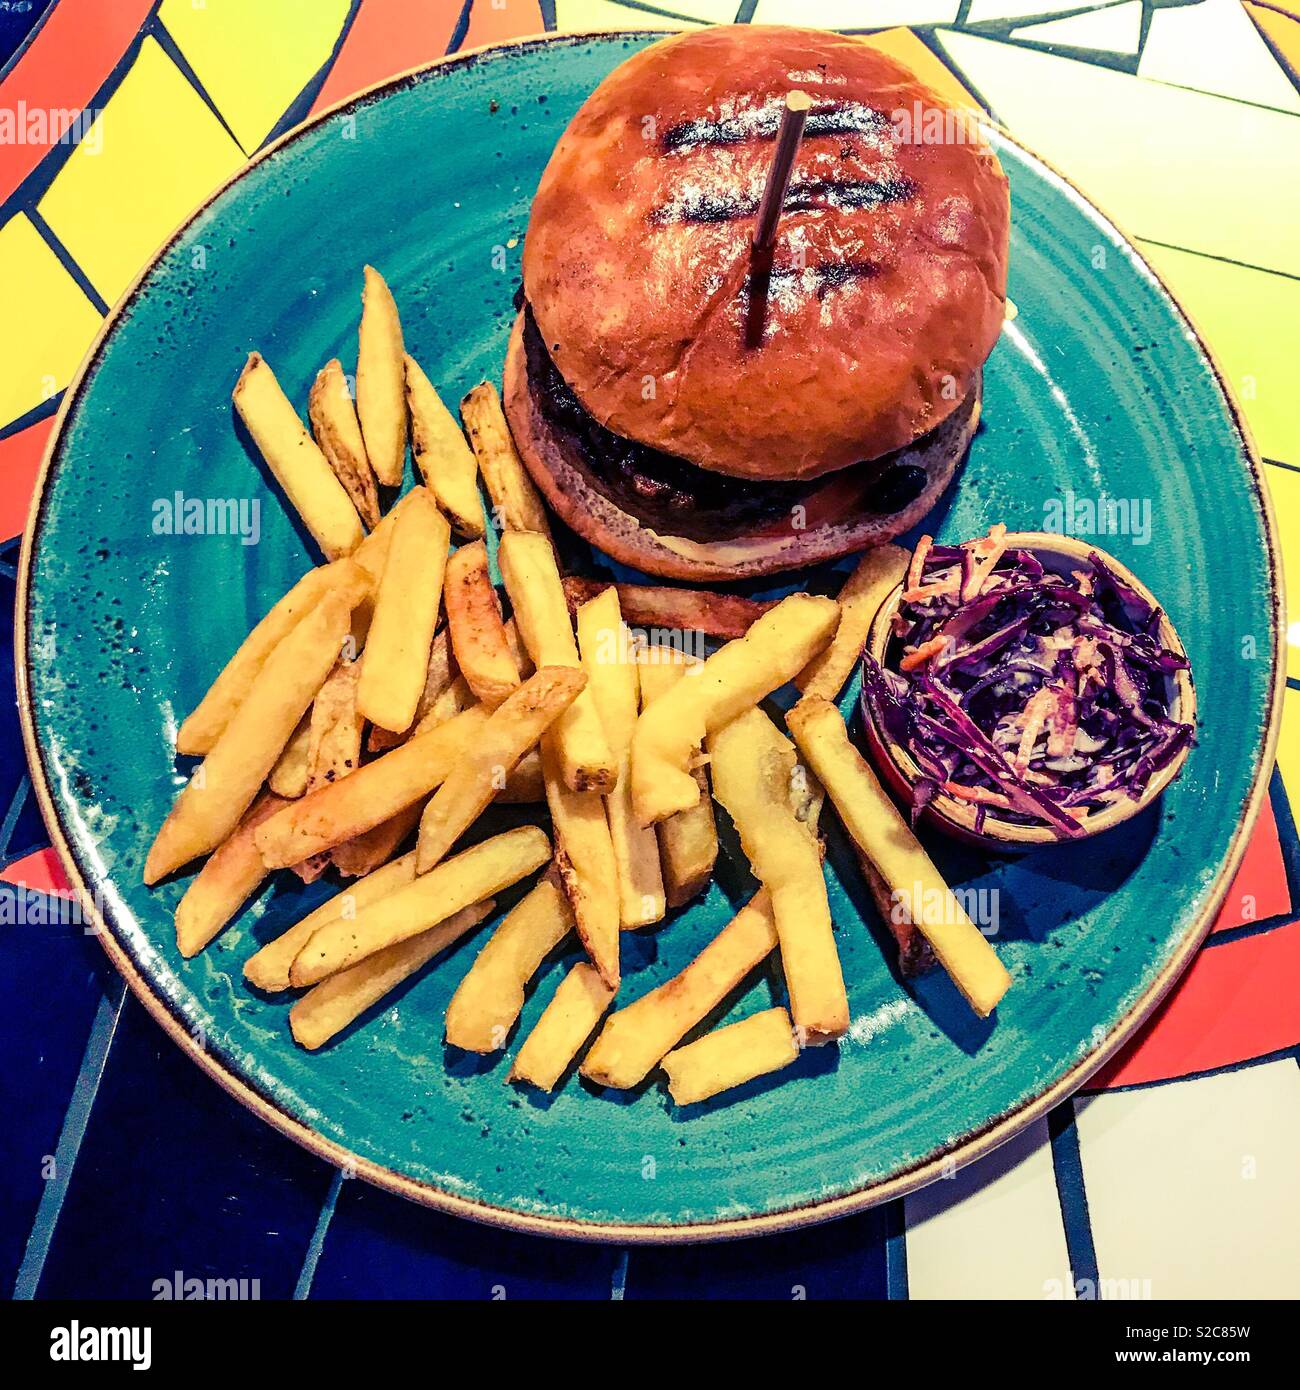 Cheeseburger and fries Stock Photo